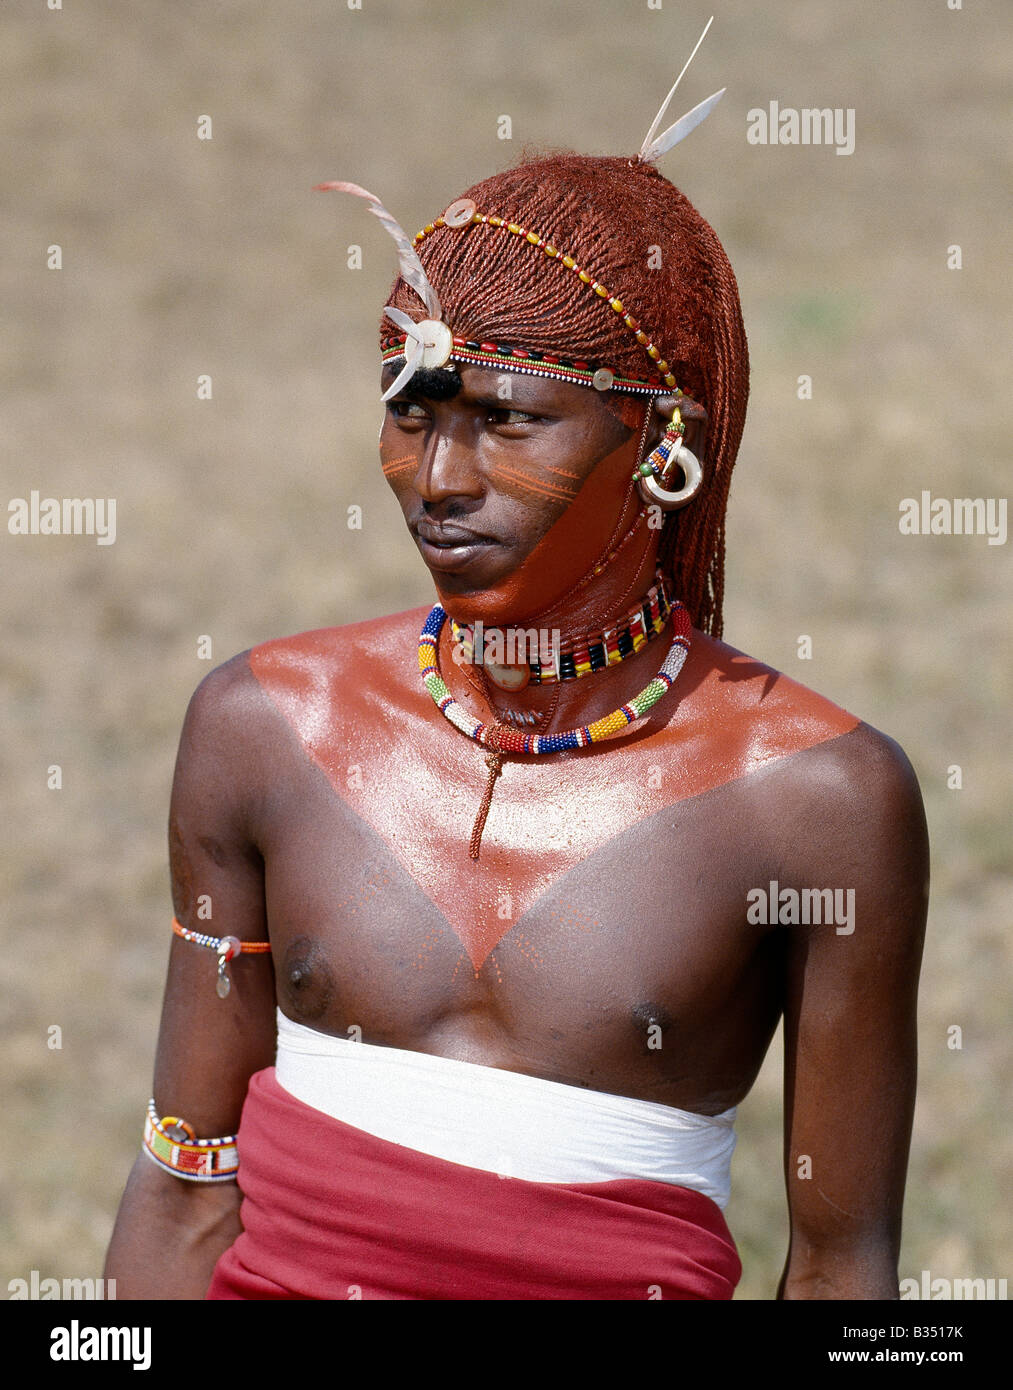 Kenya, Maralal, Maralal. A Samburu warrior resplendent with his long braids of Ochred hair. Stock Photo